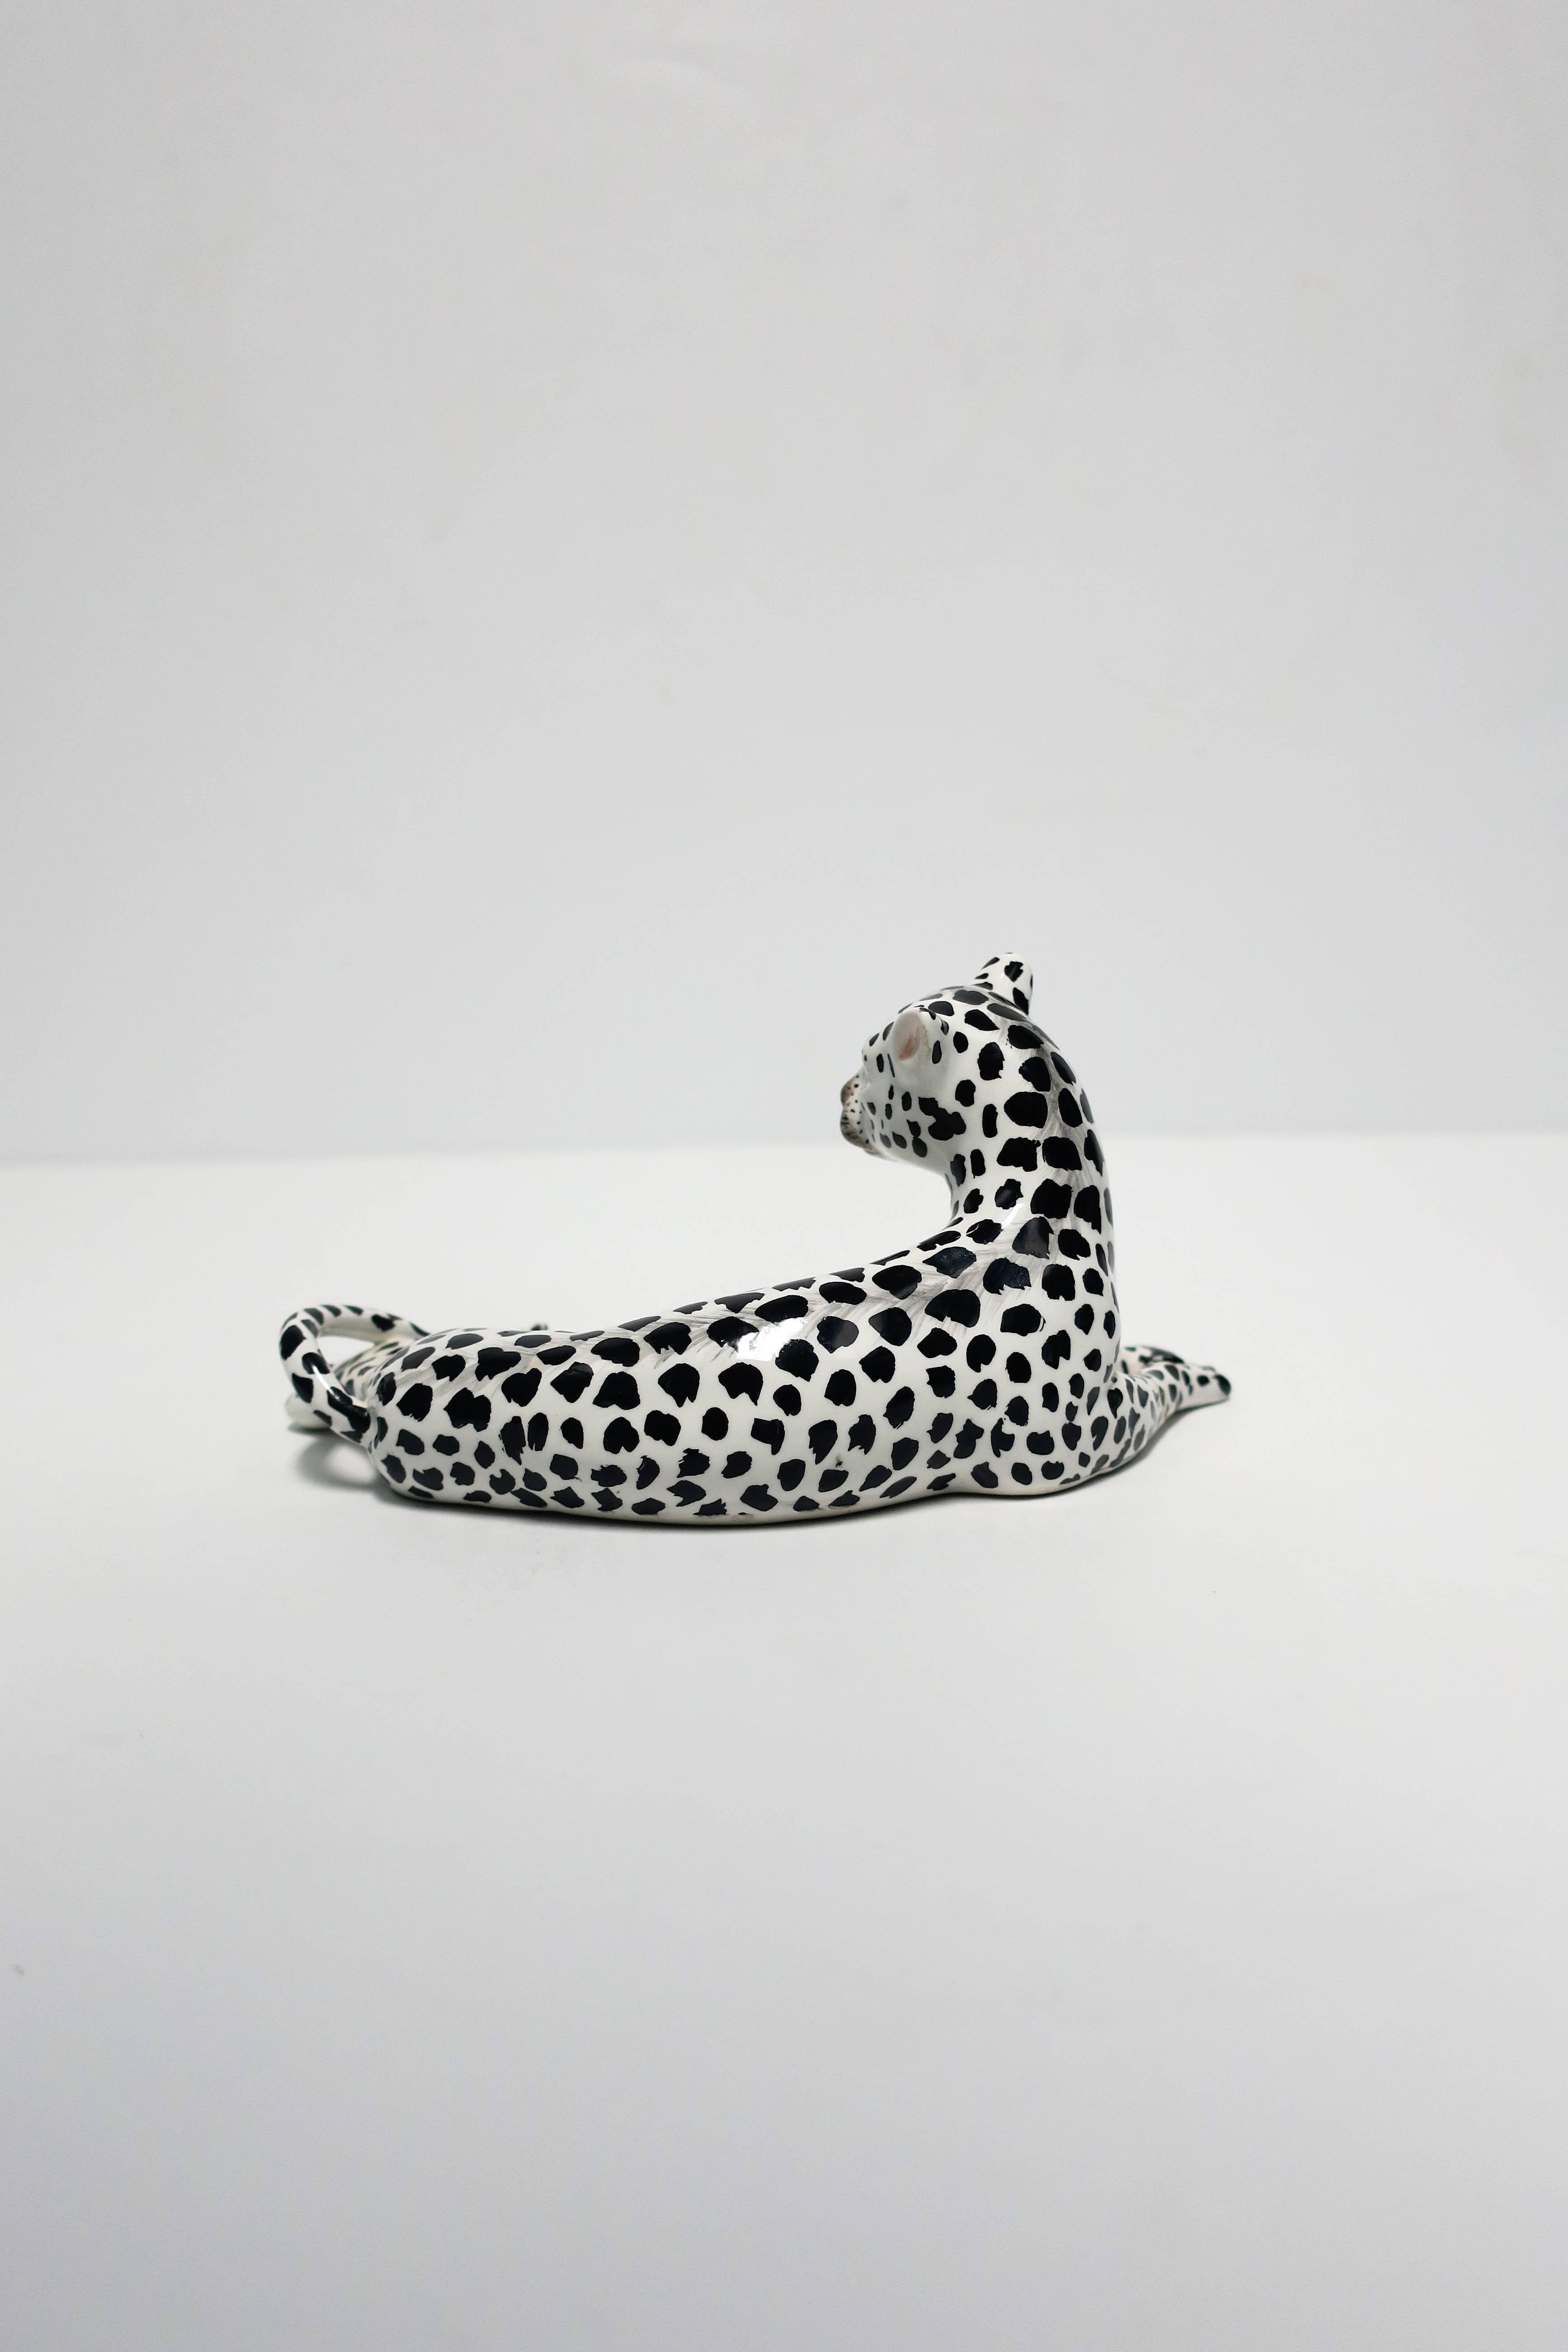 Porcelain Italian Art Deco Black and White Cheetah Leopard Cat Sculpture